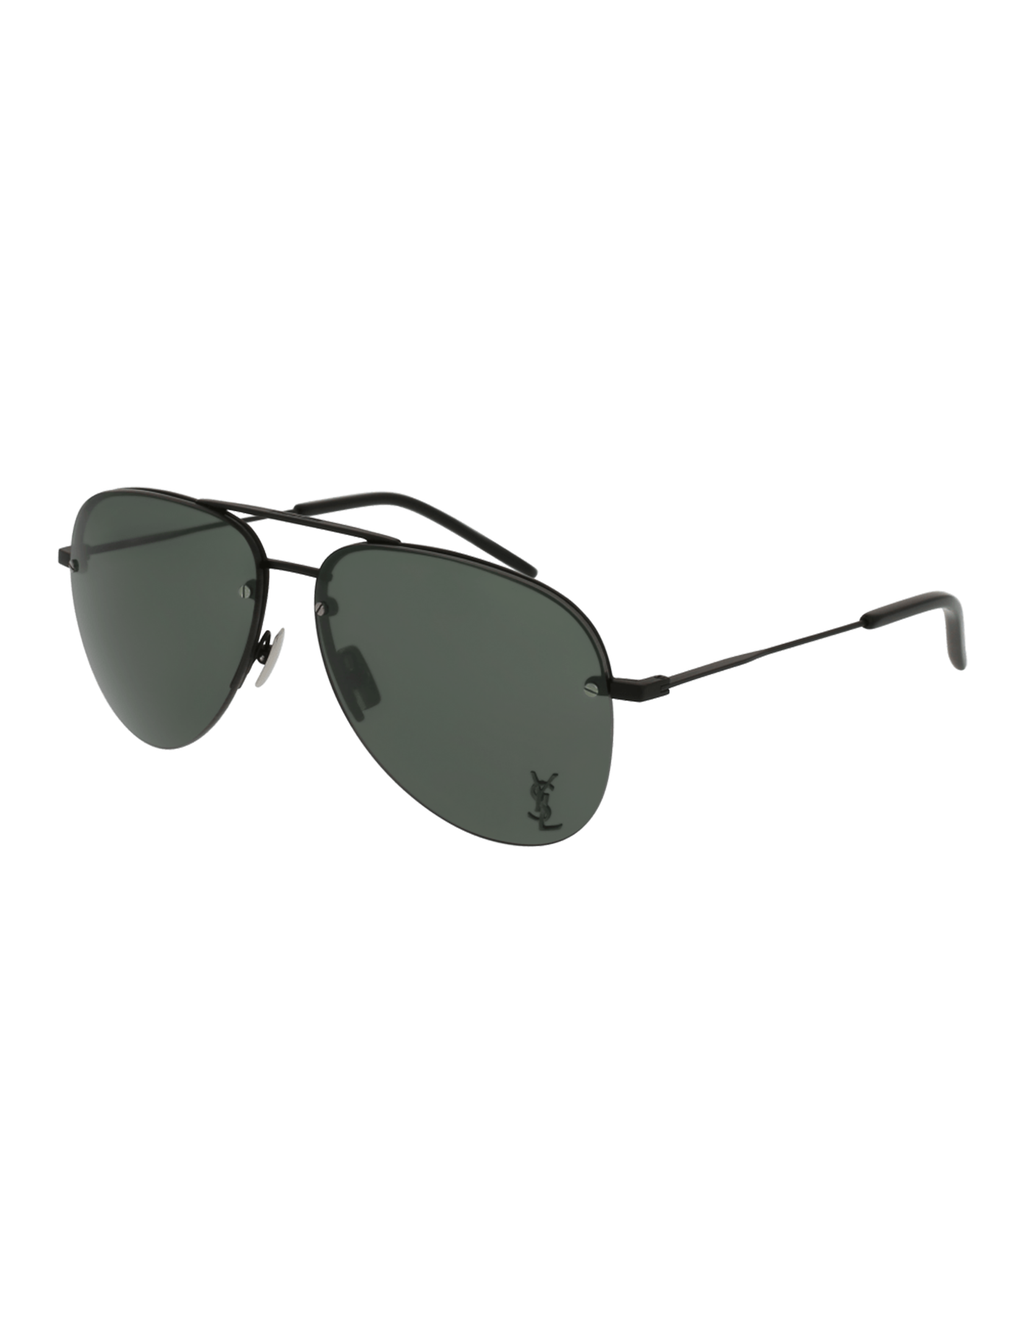 Metal Aviator Sunglasses, Black/Grey